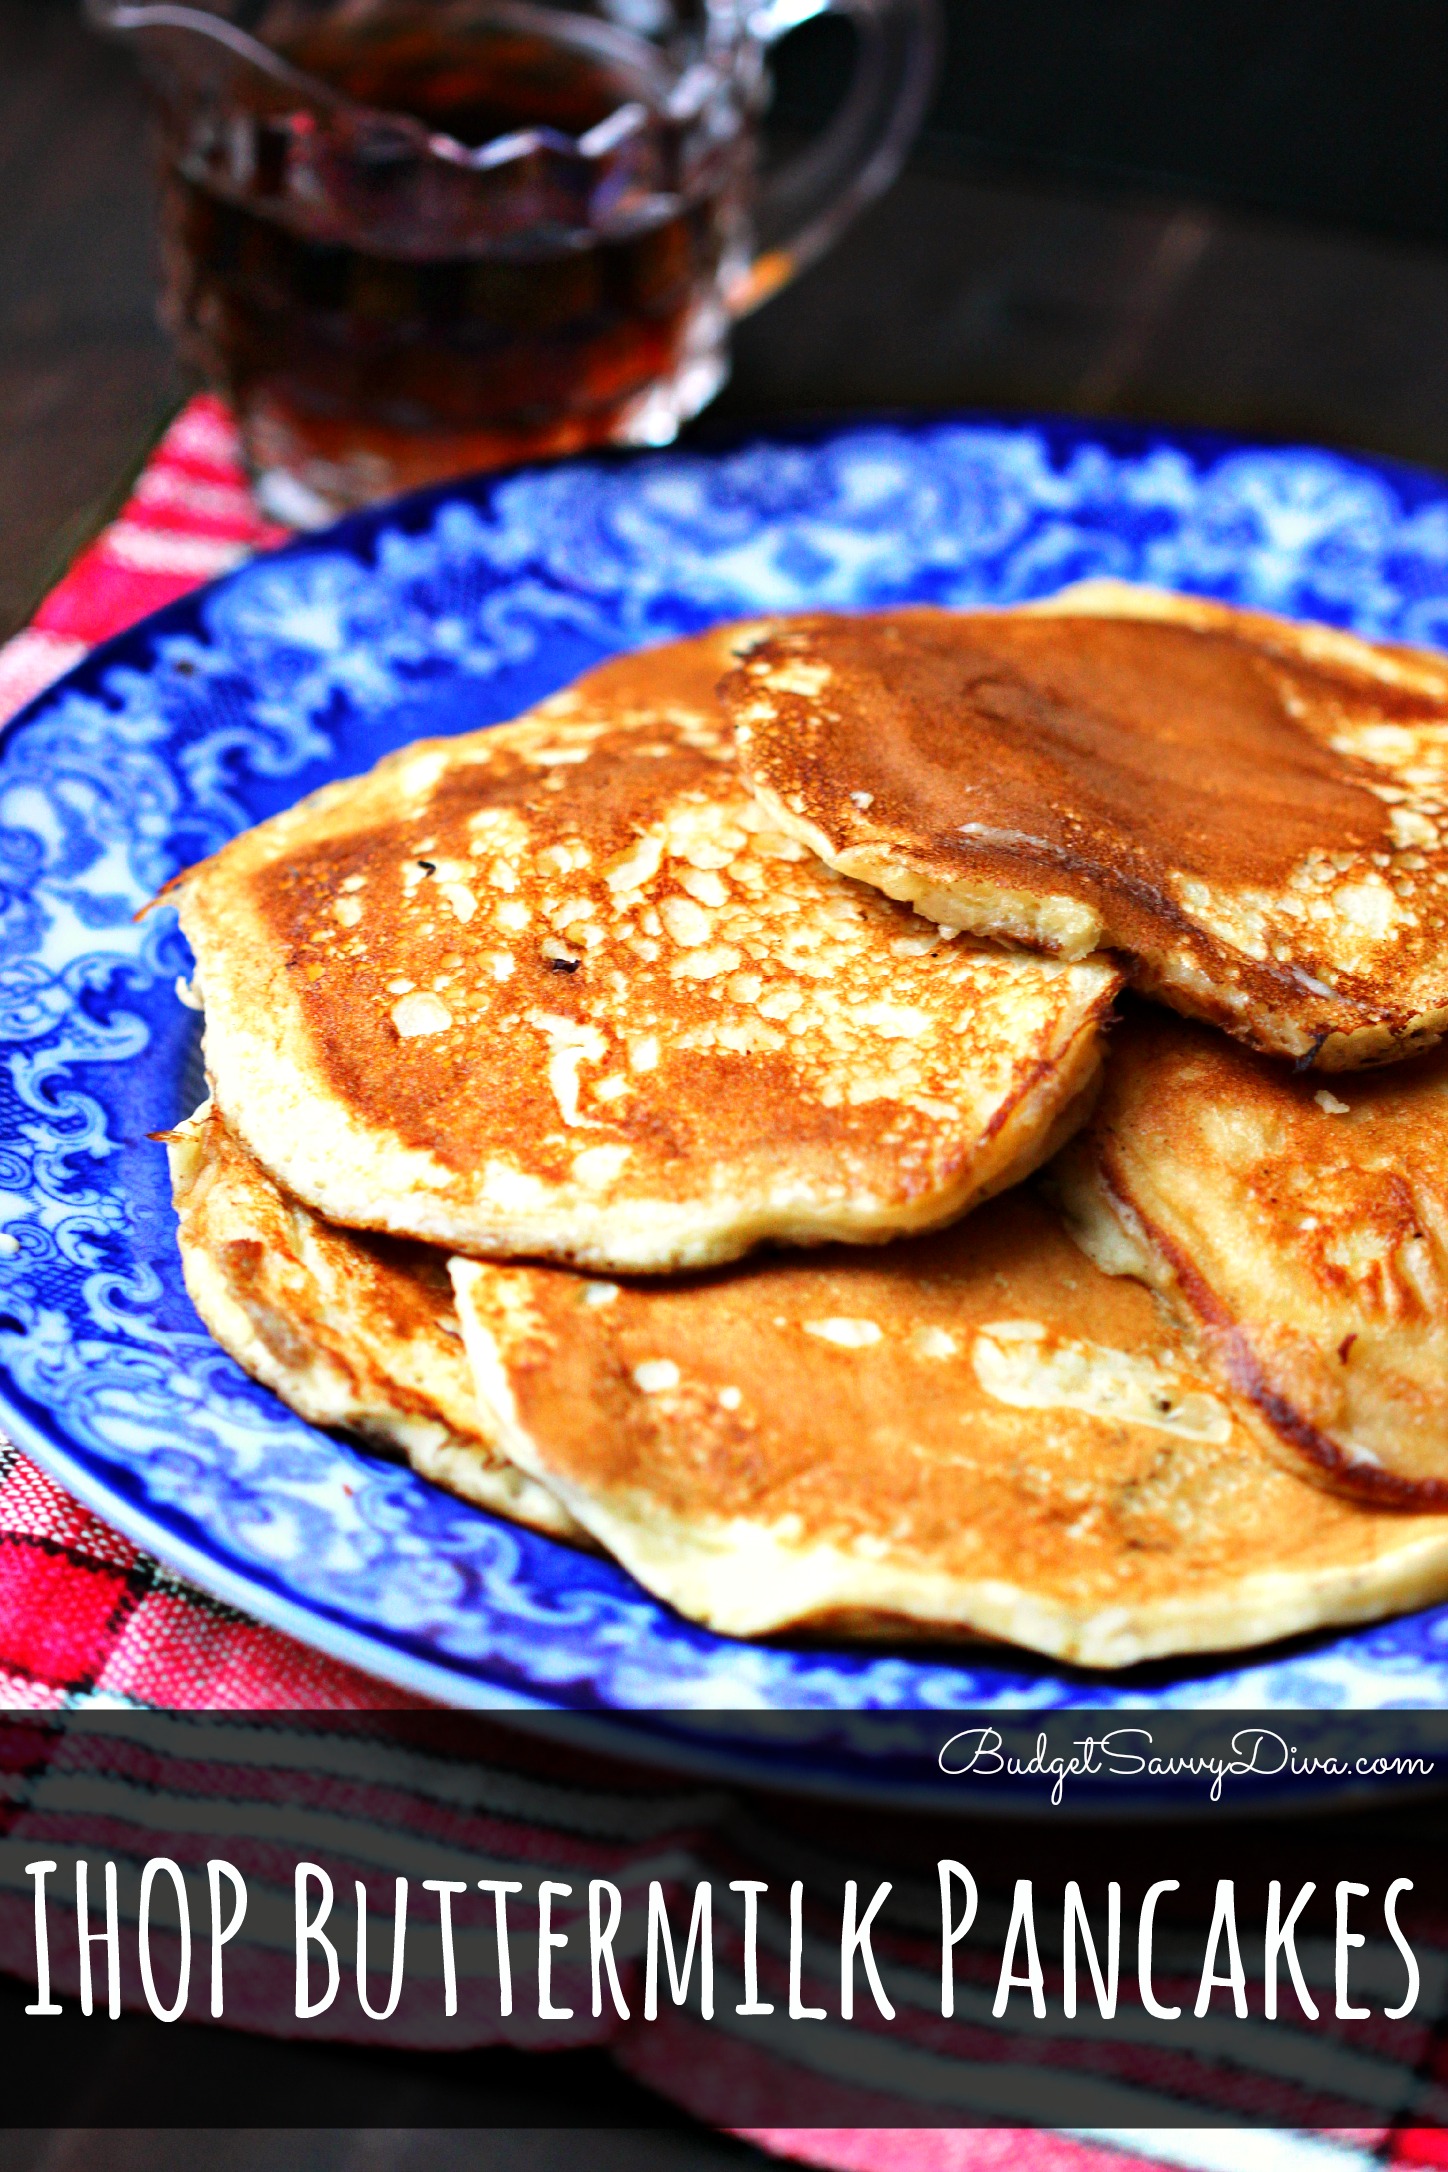 IHOP Buttermilk Pancakes Recipe - Budget Savvy Diva